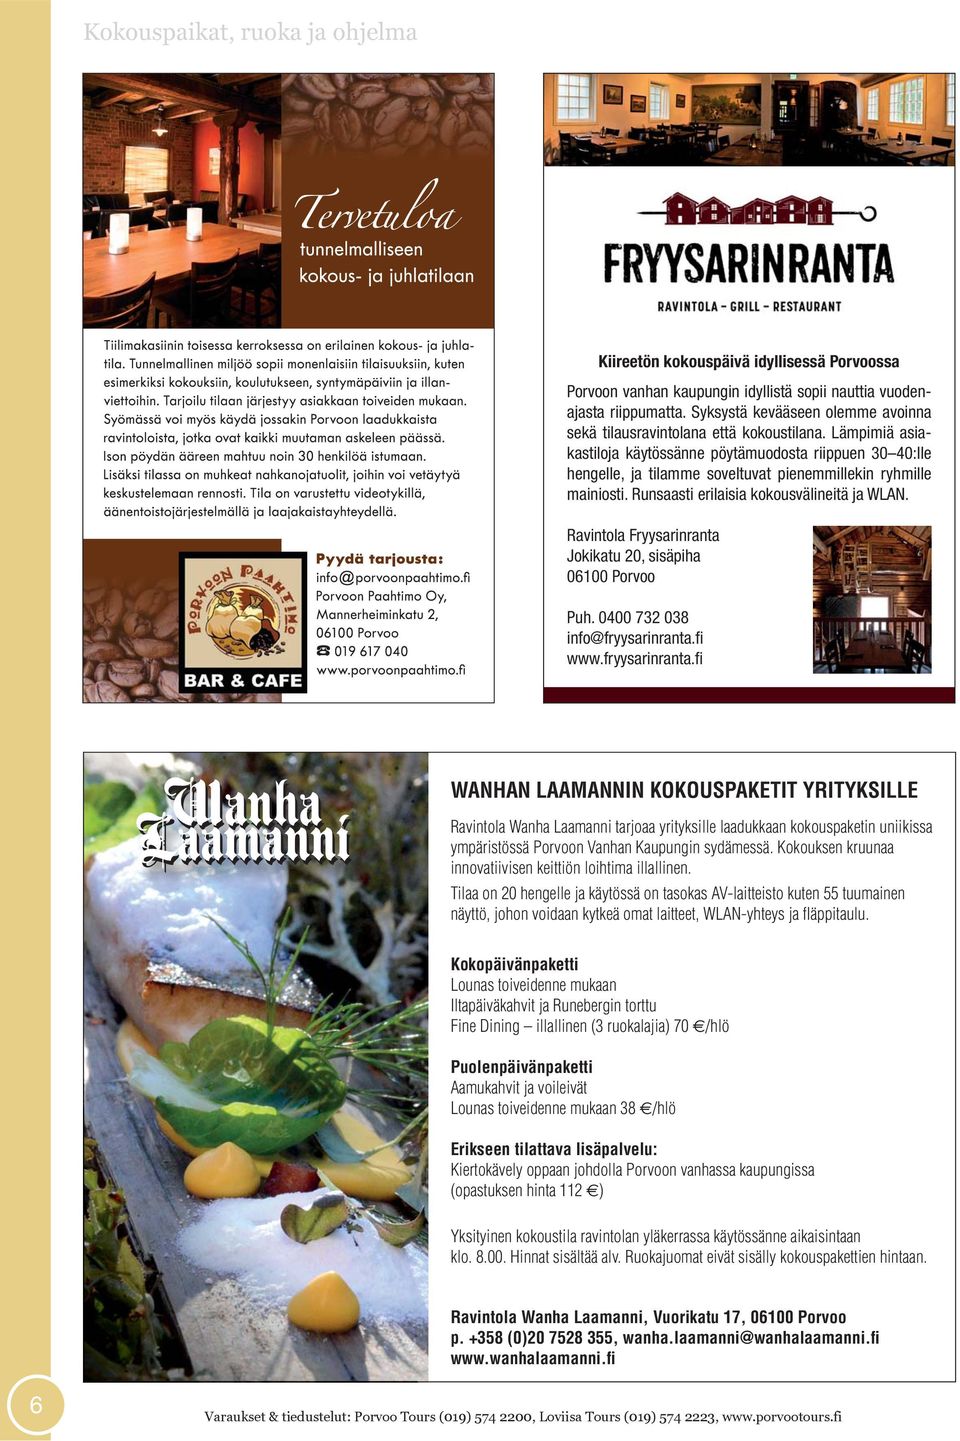 Ravintola Fryysarinranta Jokikatu 20, sisäpiha 06100 Porvoo Puh. 0400 732 038 info@fryysarinranta.